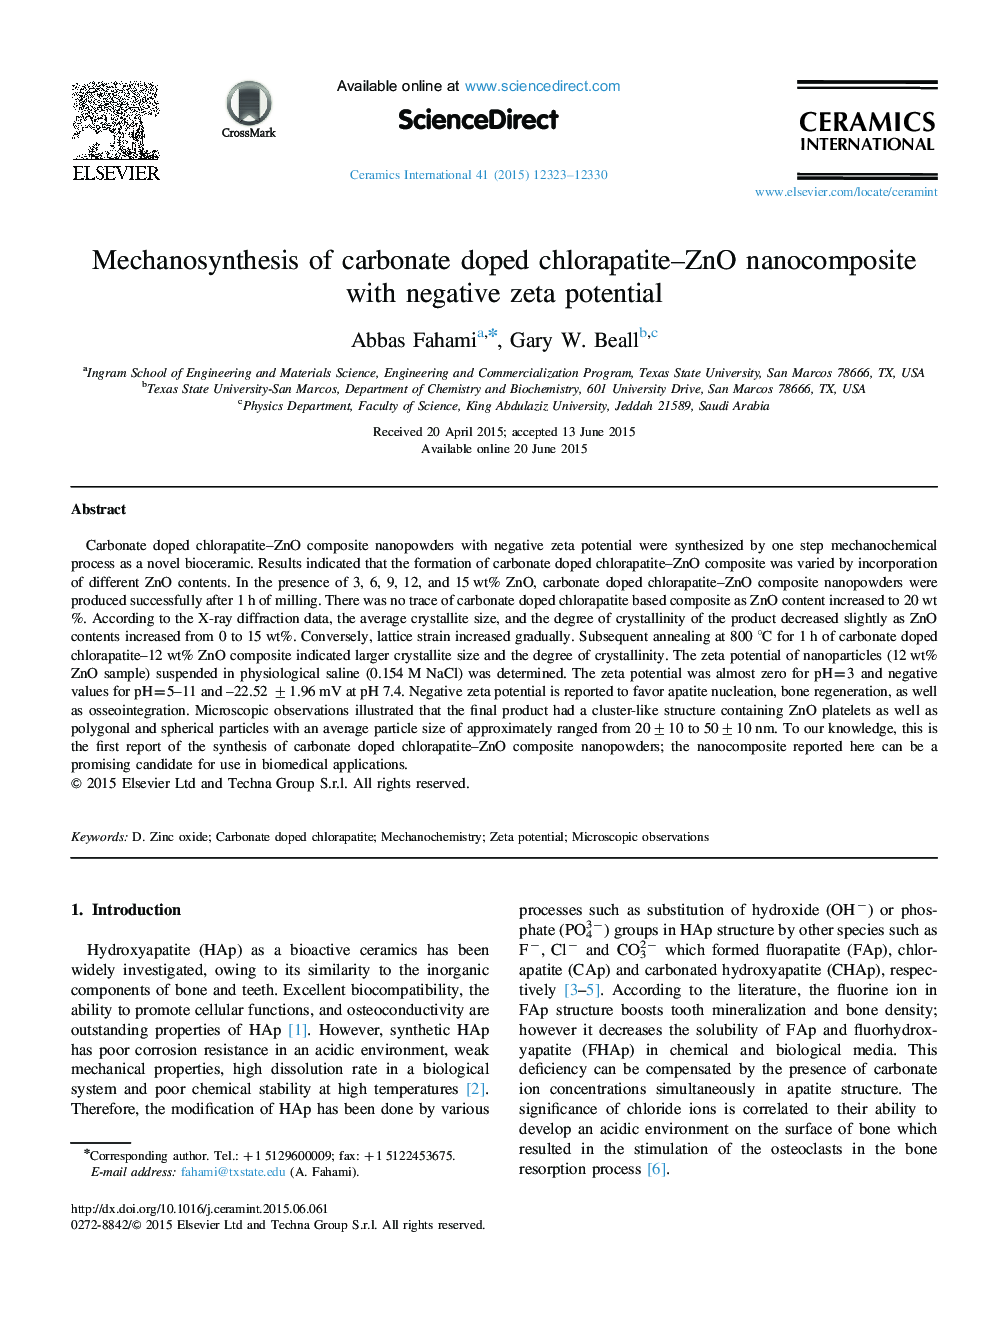 Mechanosynthesis of carbonate doped chlorapatite–ZnO nanocomposite with negative zeta potential